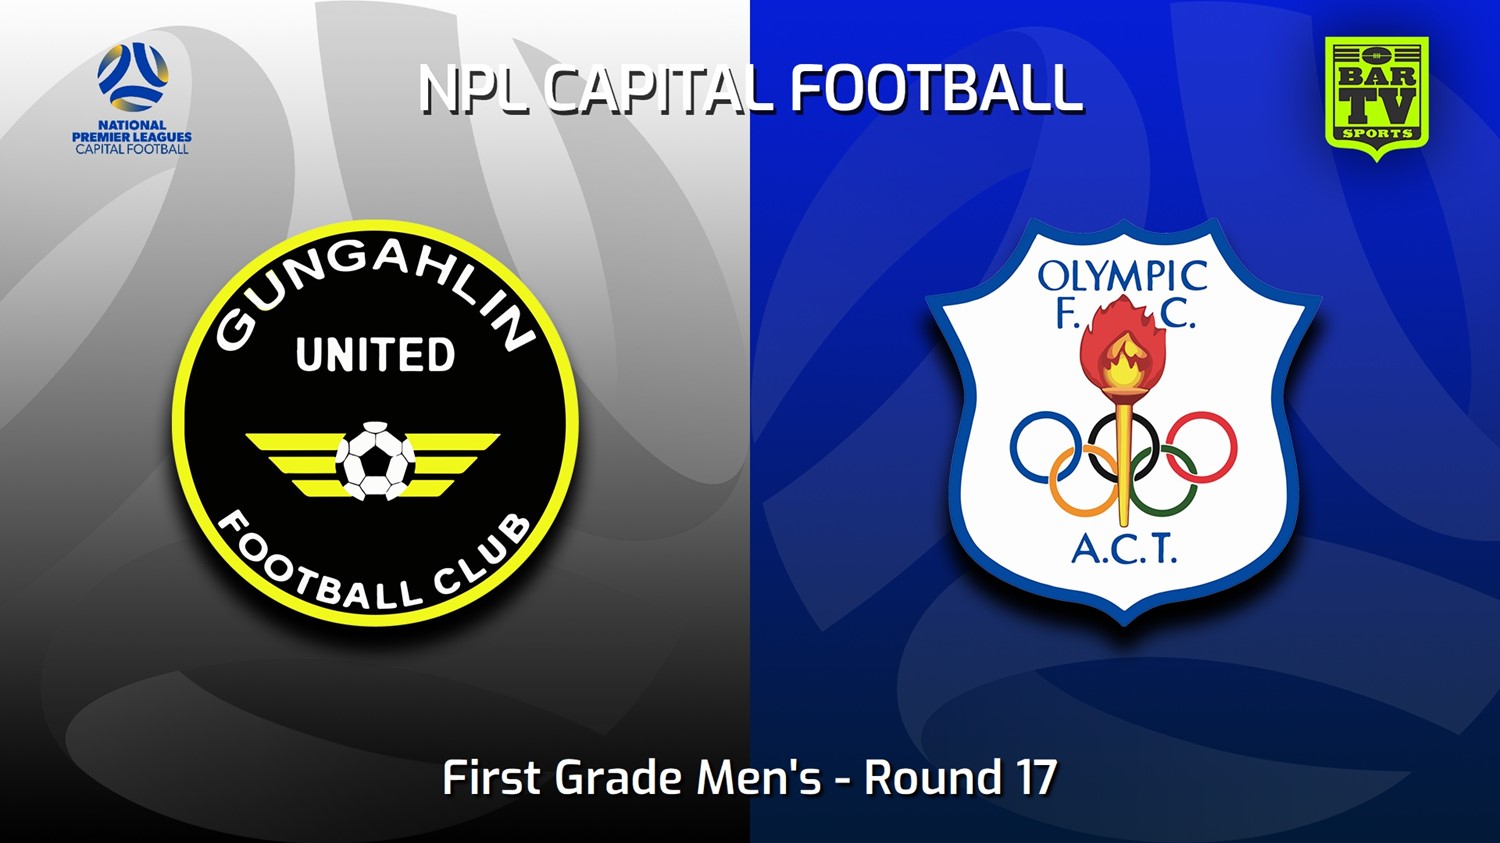 230806-Capital NPL Round 17 - Gungahlin United v Canberra Olympic FC Minigame Slate Image